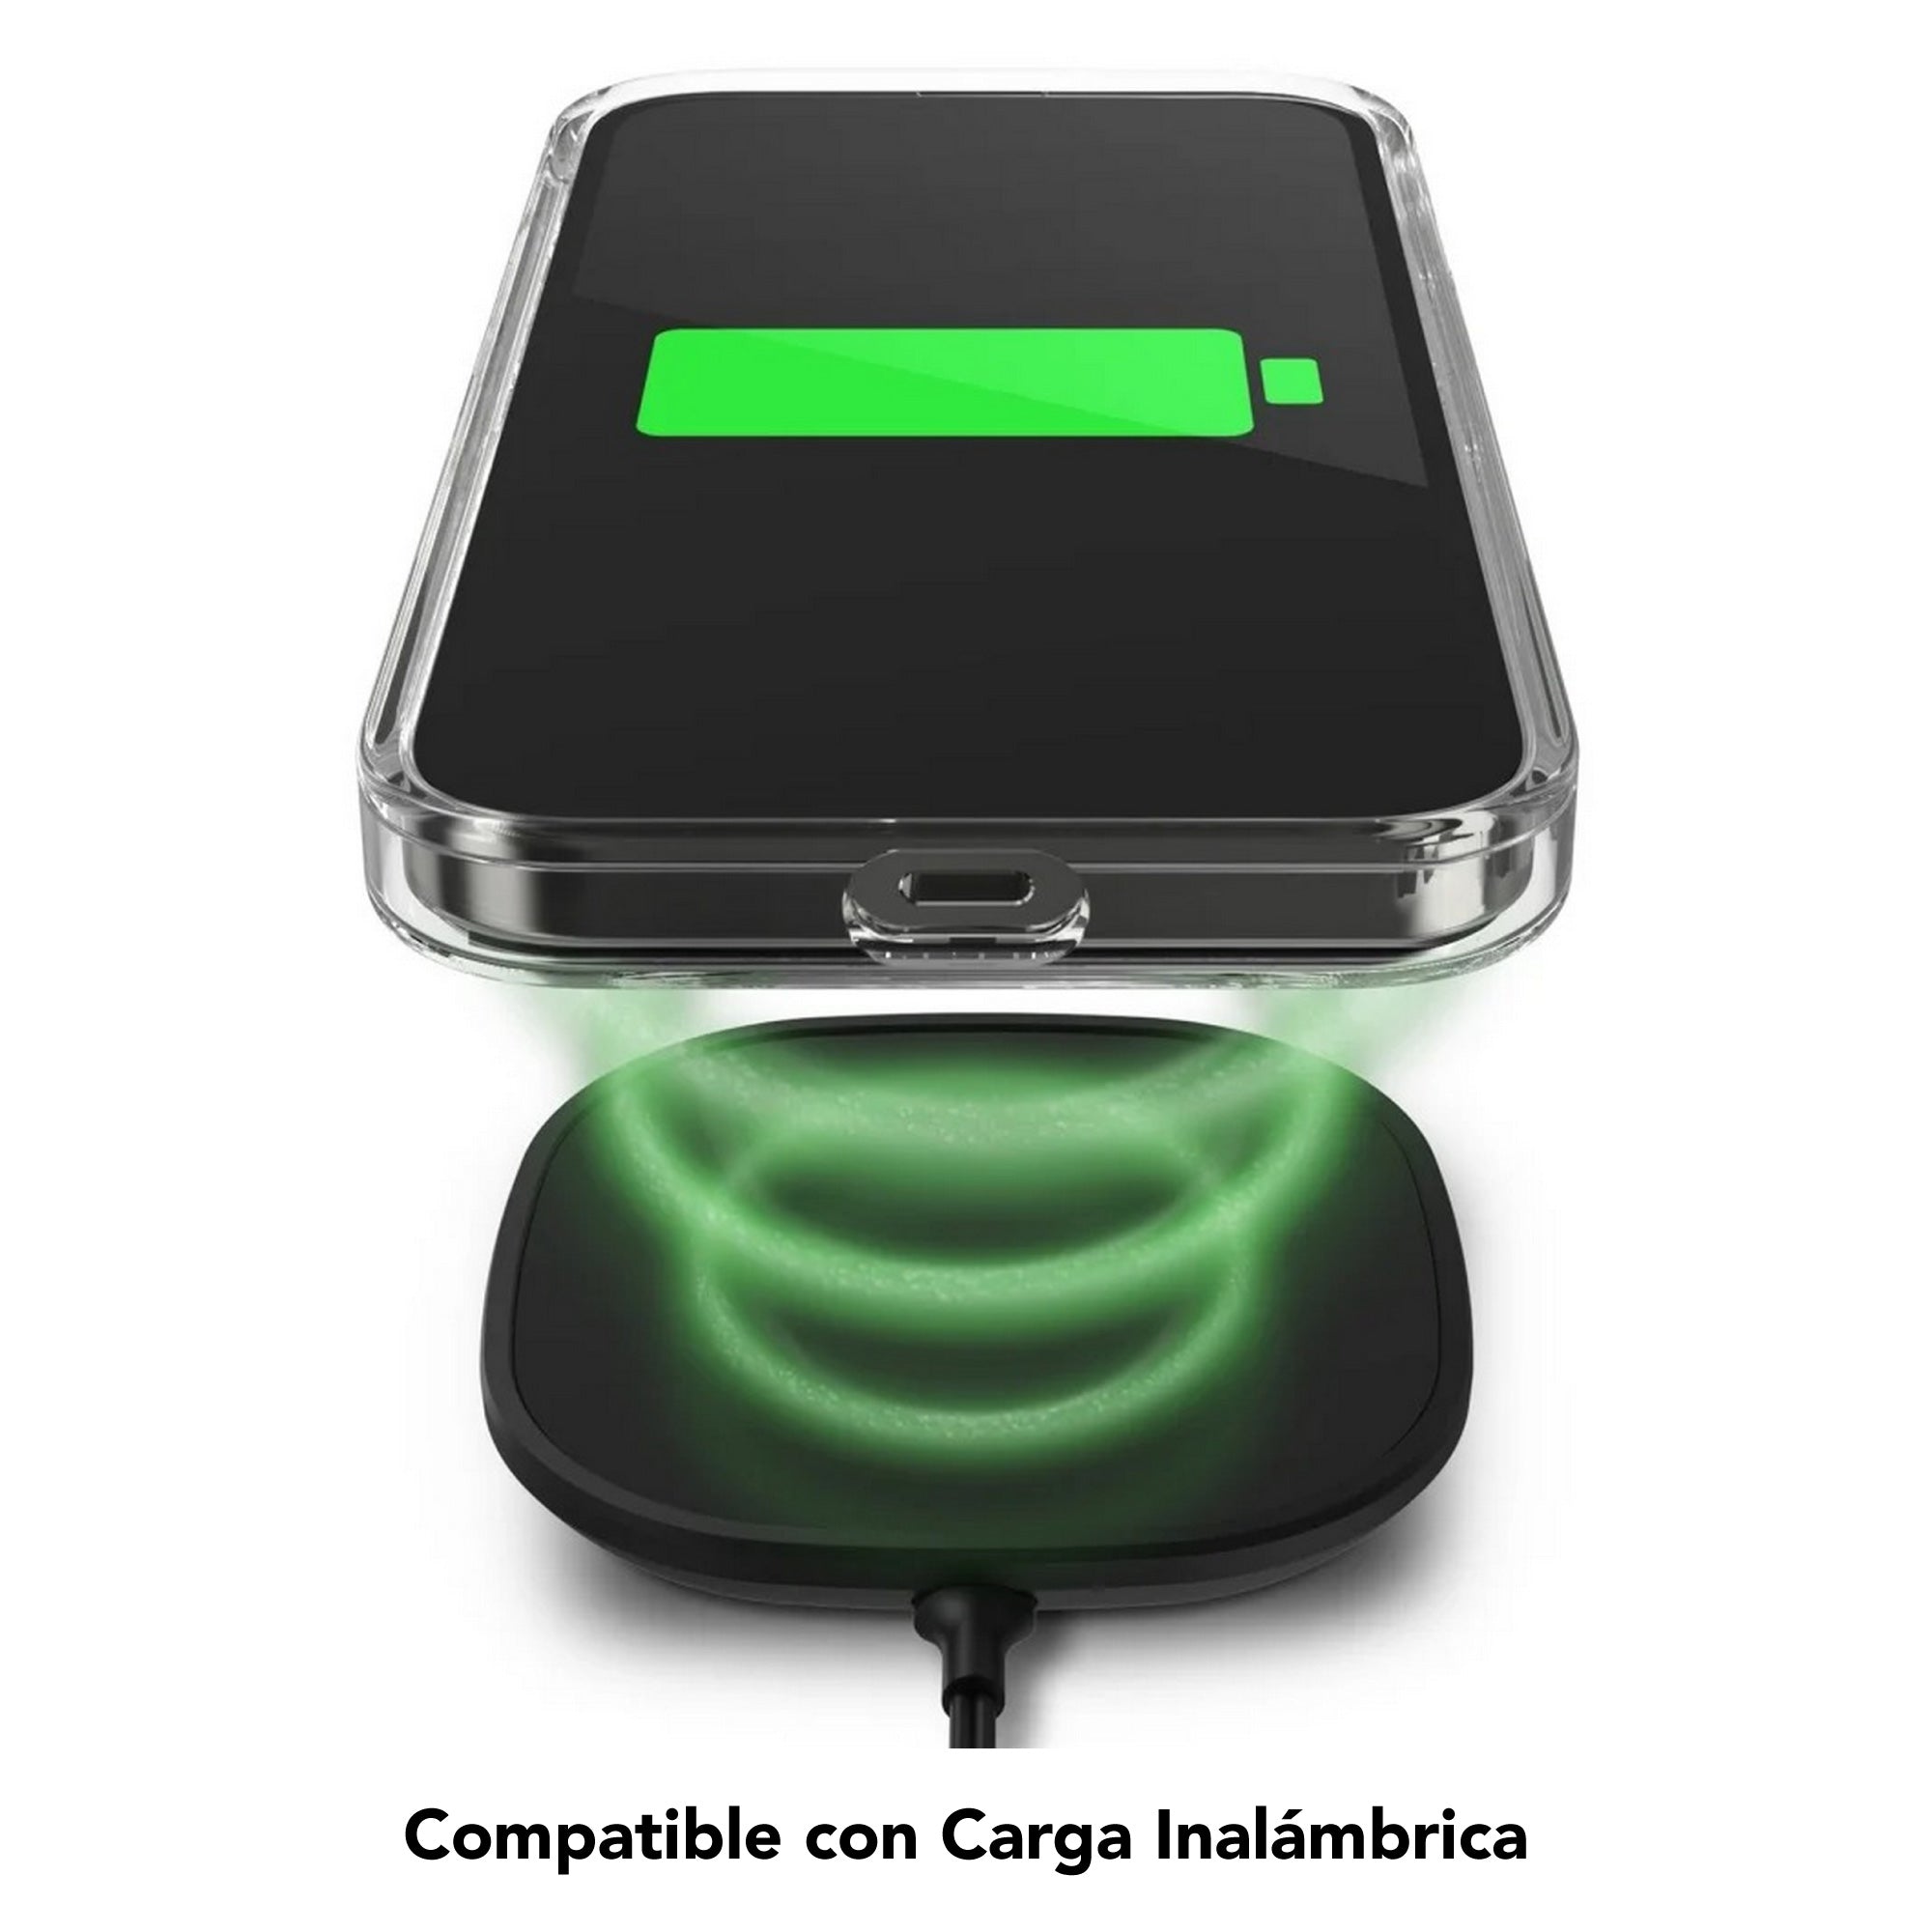 Case Gear4 Crystal Palace Snap compatible con MagSafe para iPhone 14 Pro - Transparente